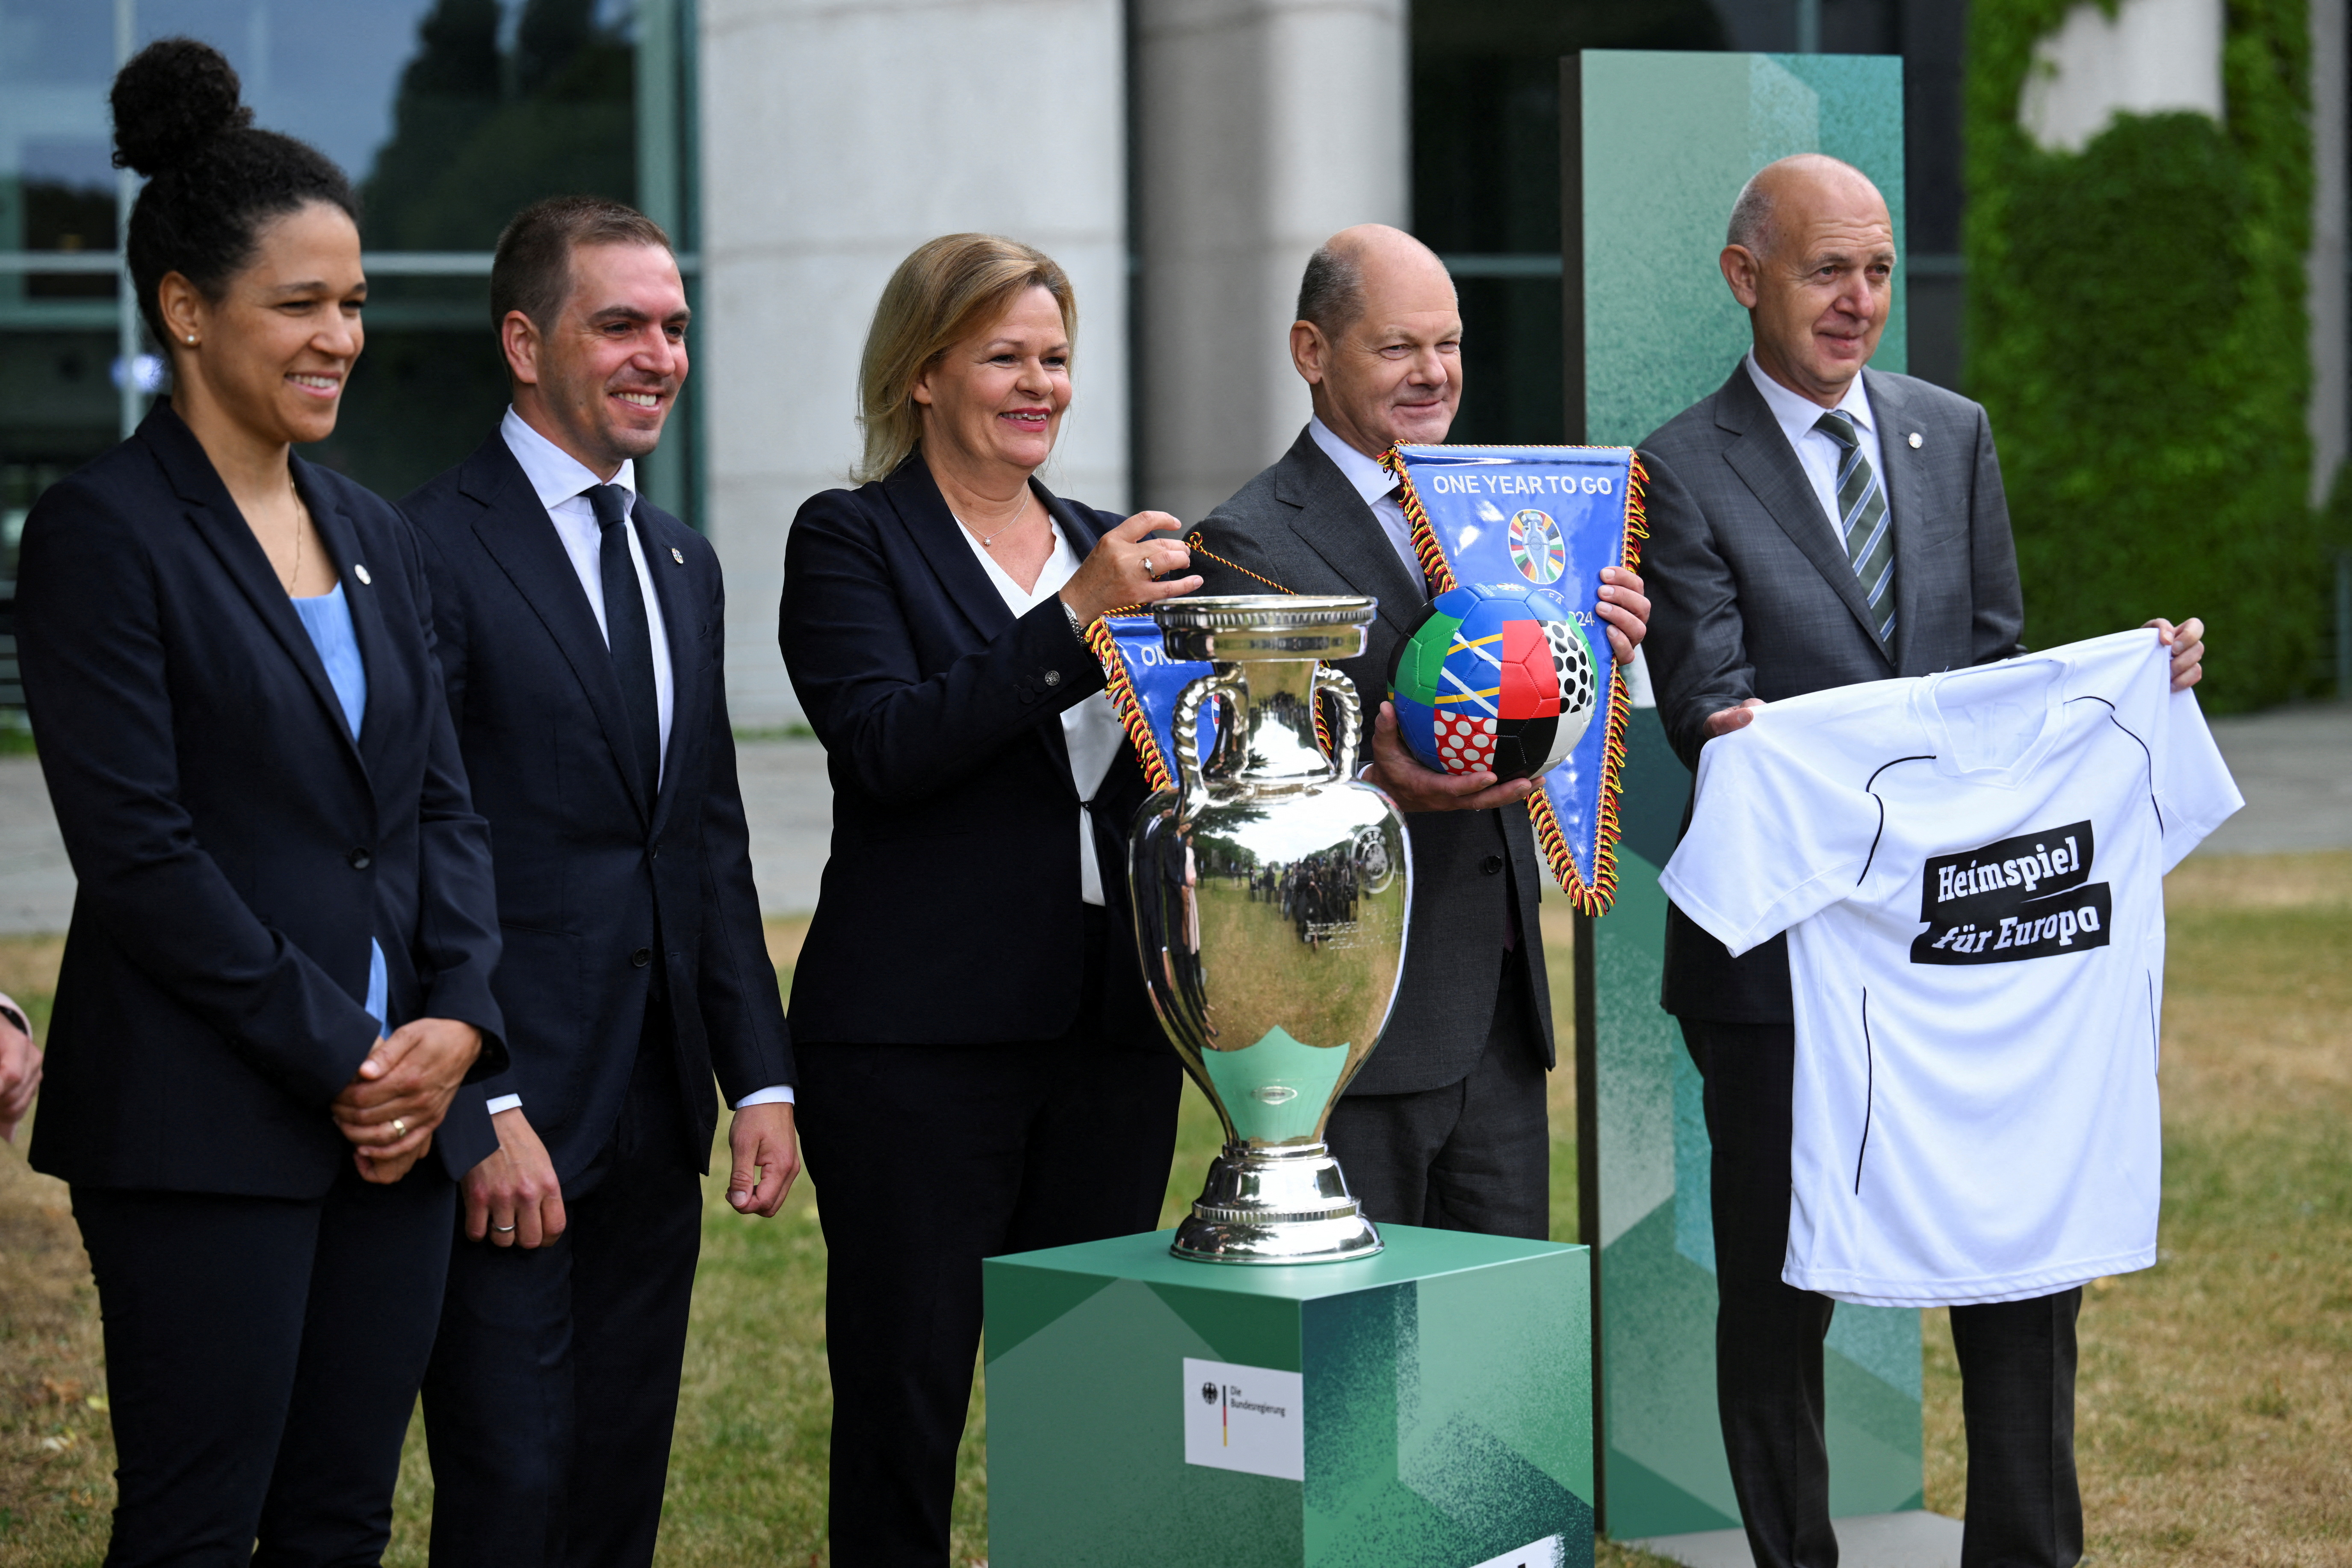 Euro 2024 tournament: Germany unveils logo for soccer's Euro 2024 tournament  - The Economic Times